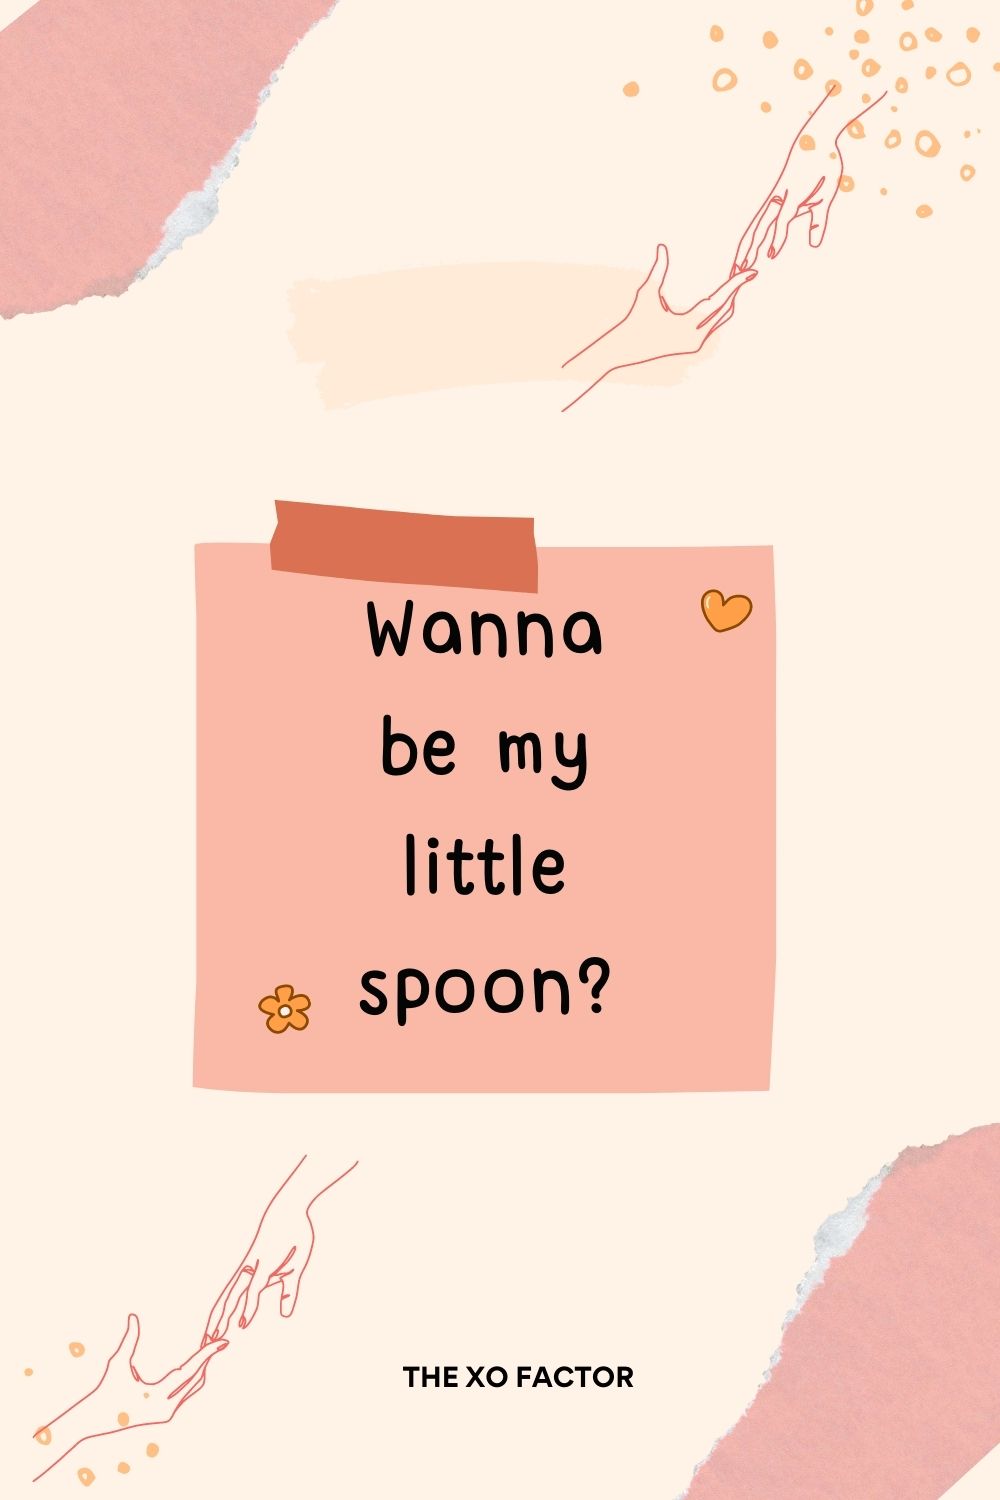 Wanna be my little spoon?